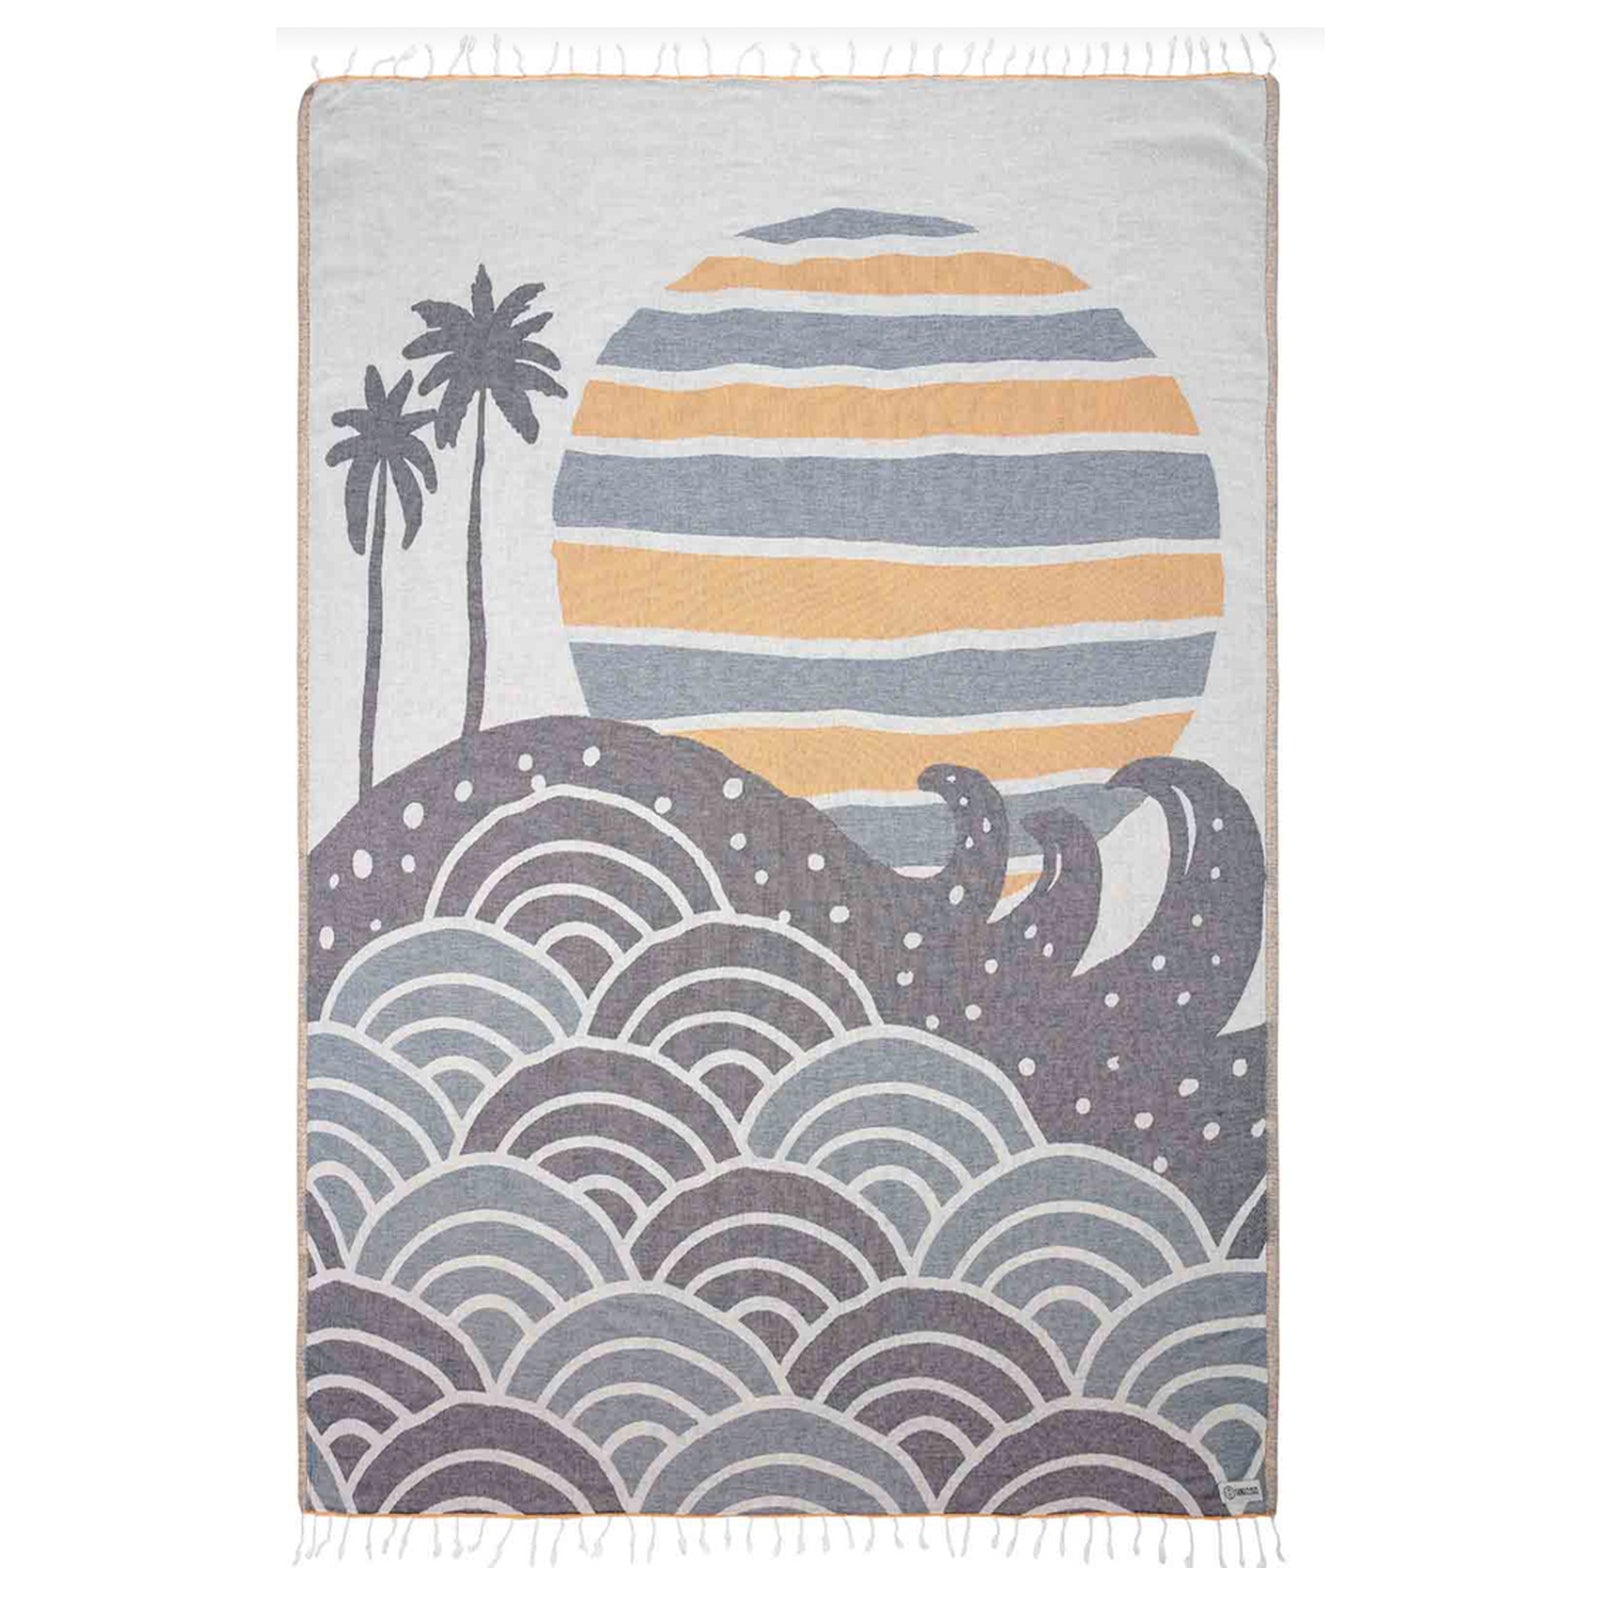 Sand Cloud Large Towel – Herreshoff Marine Museum Store